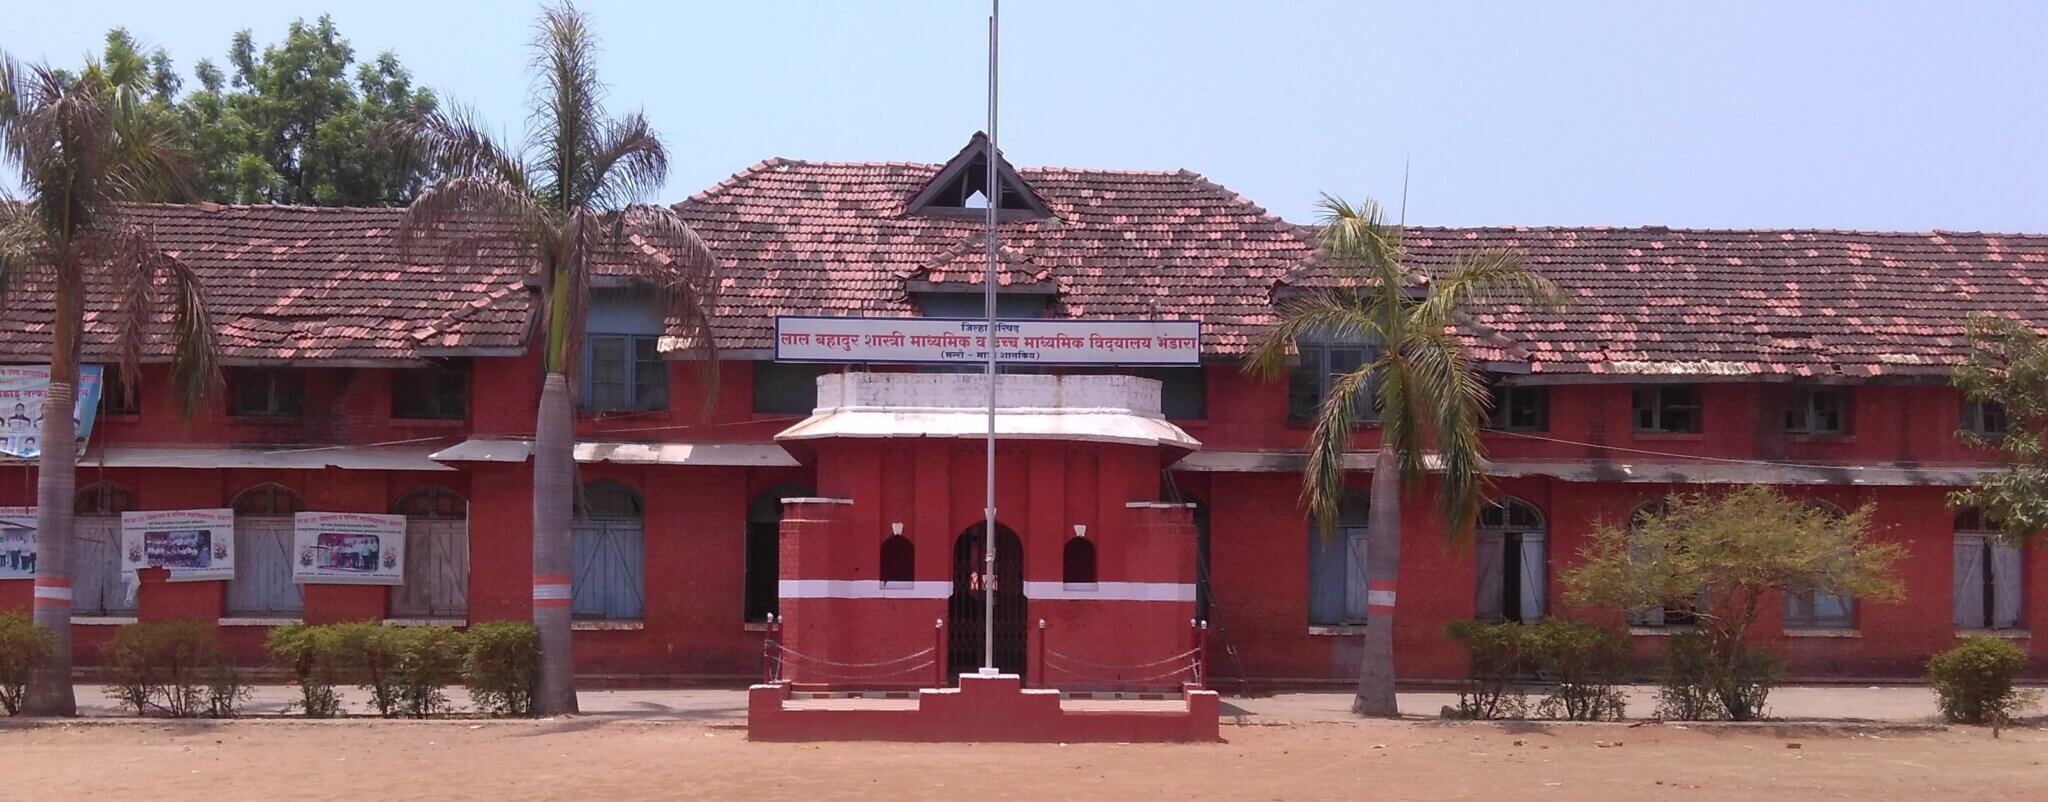 Bhandara School